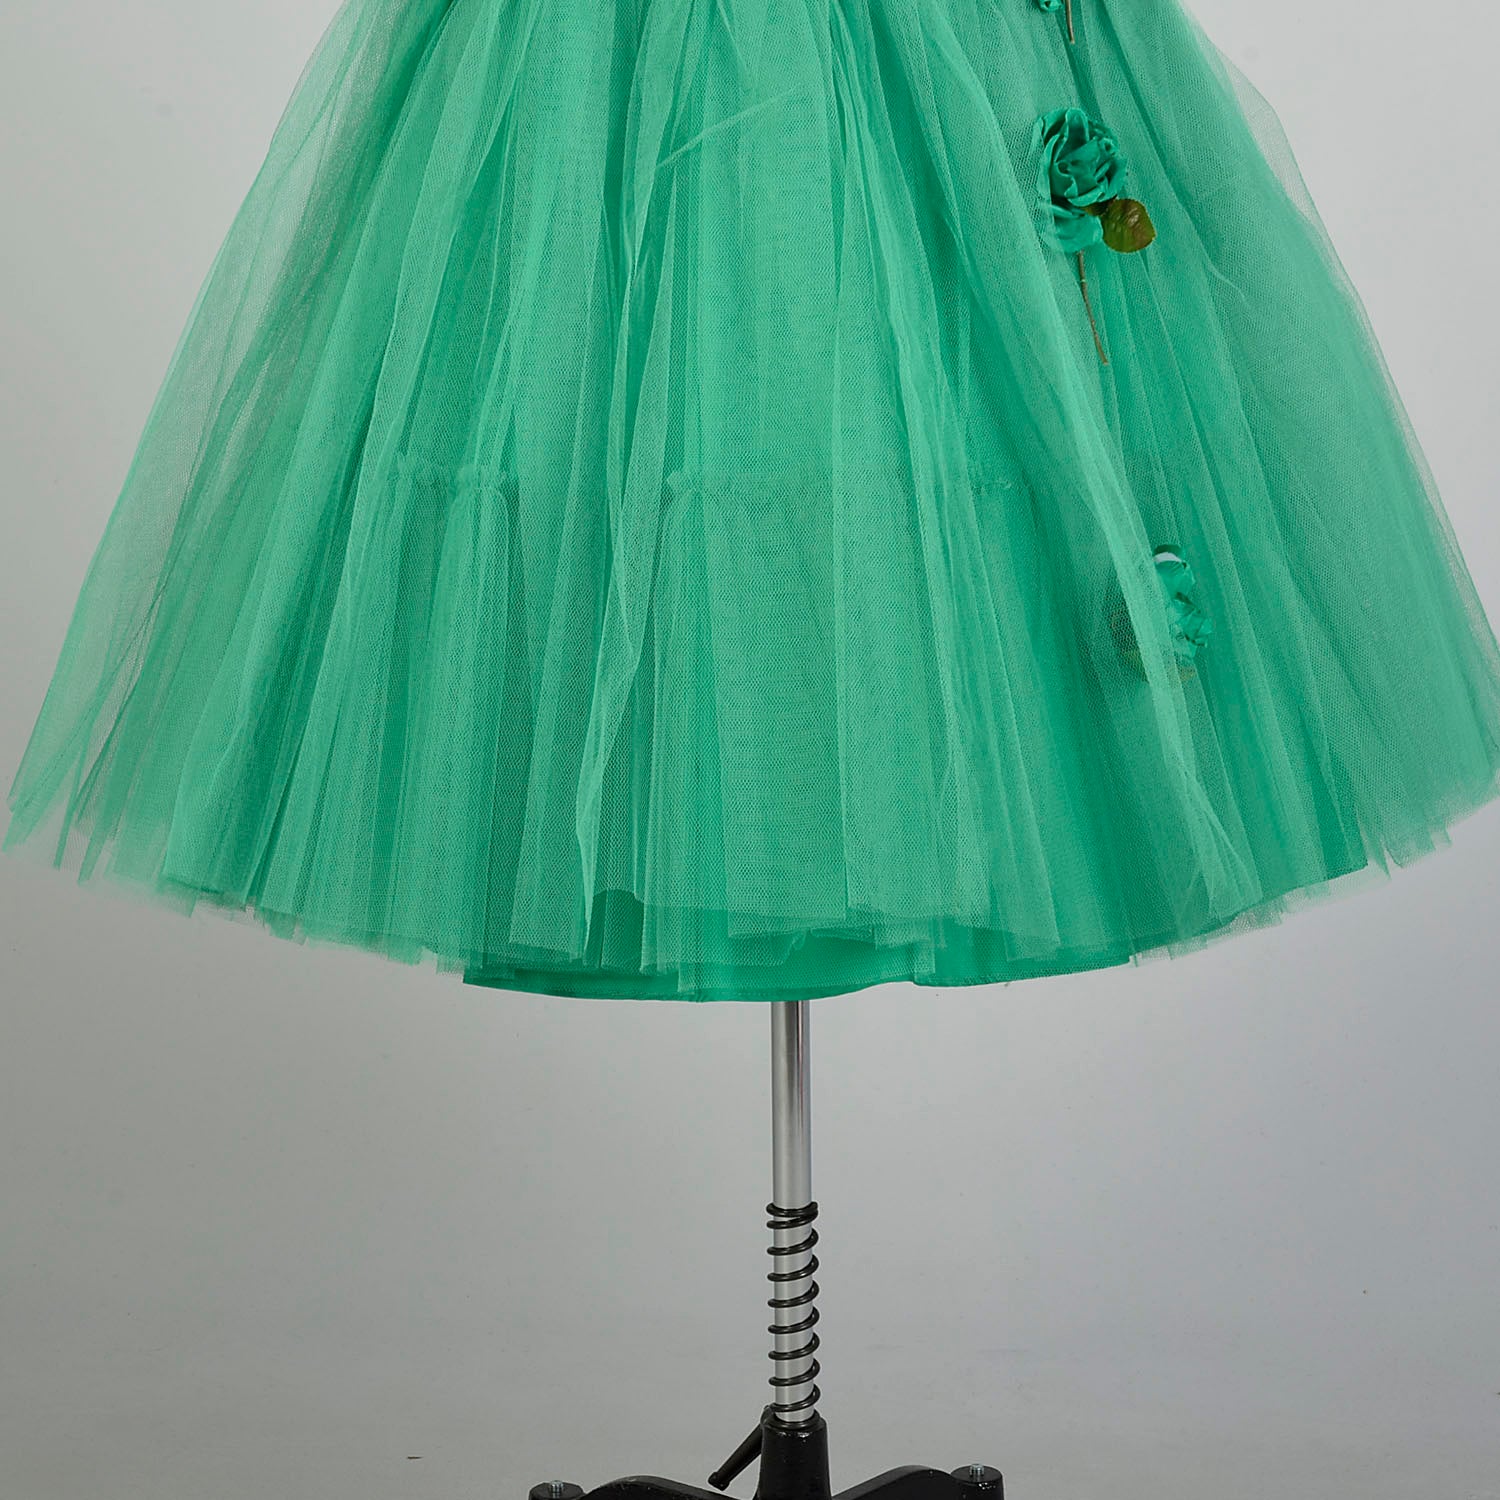 XS 1950s Kelly Green Tulle Prom Dress Strapless Taffeta Peplum Bodice Rose Embellishments